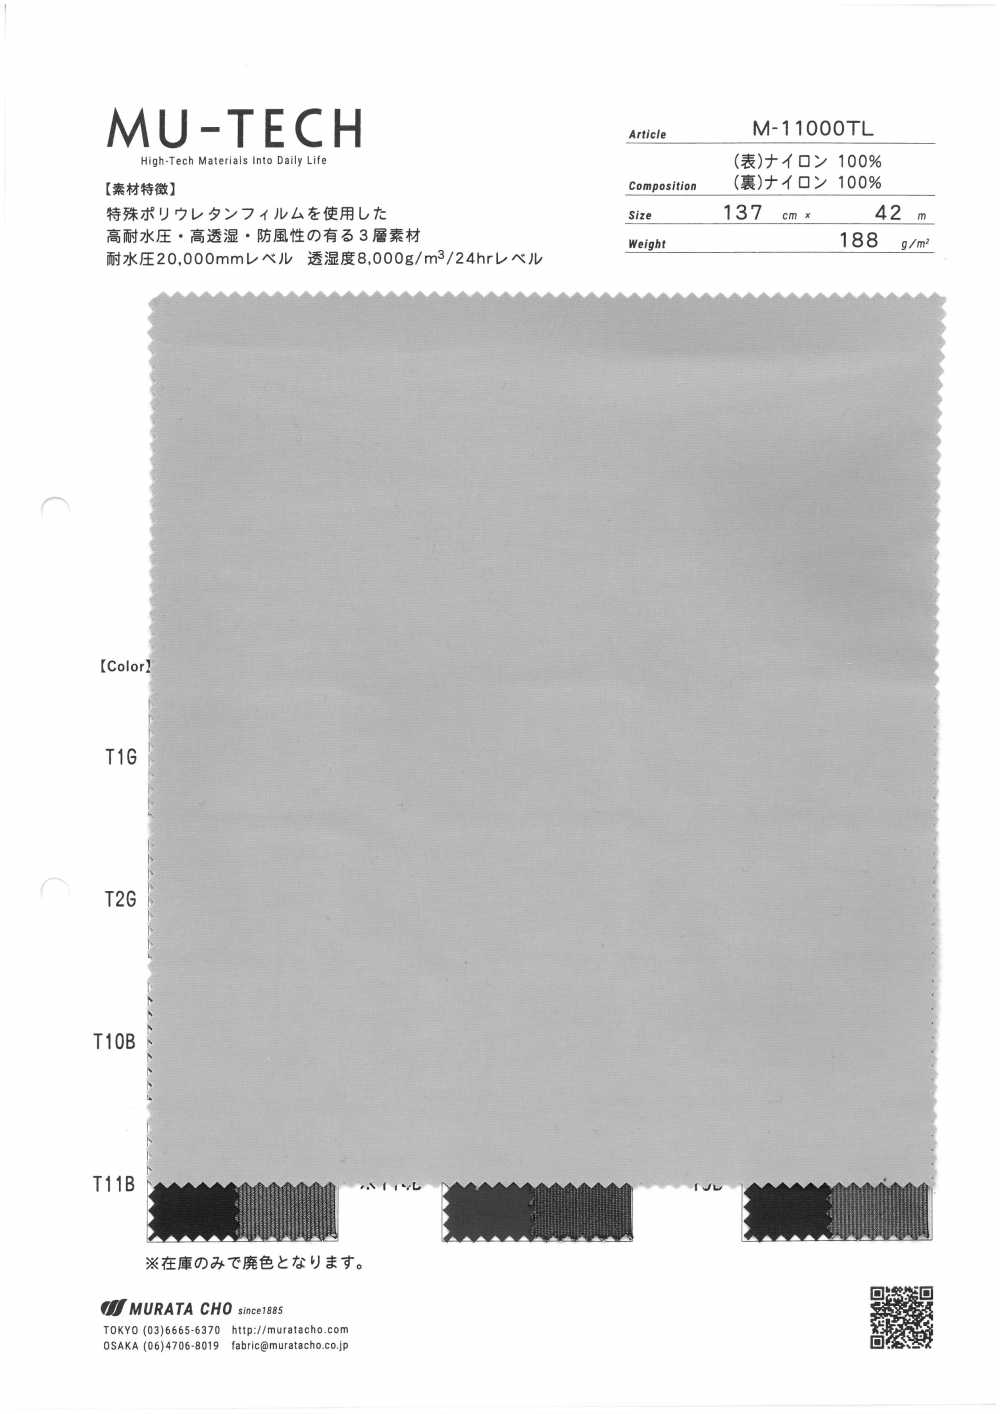 M-11000TL High-performance 3-layer Nylon Fuzzy[Textile / Fabric] Muratacho